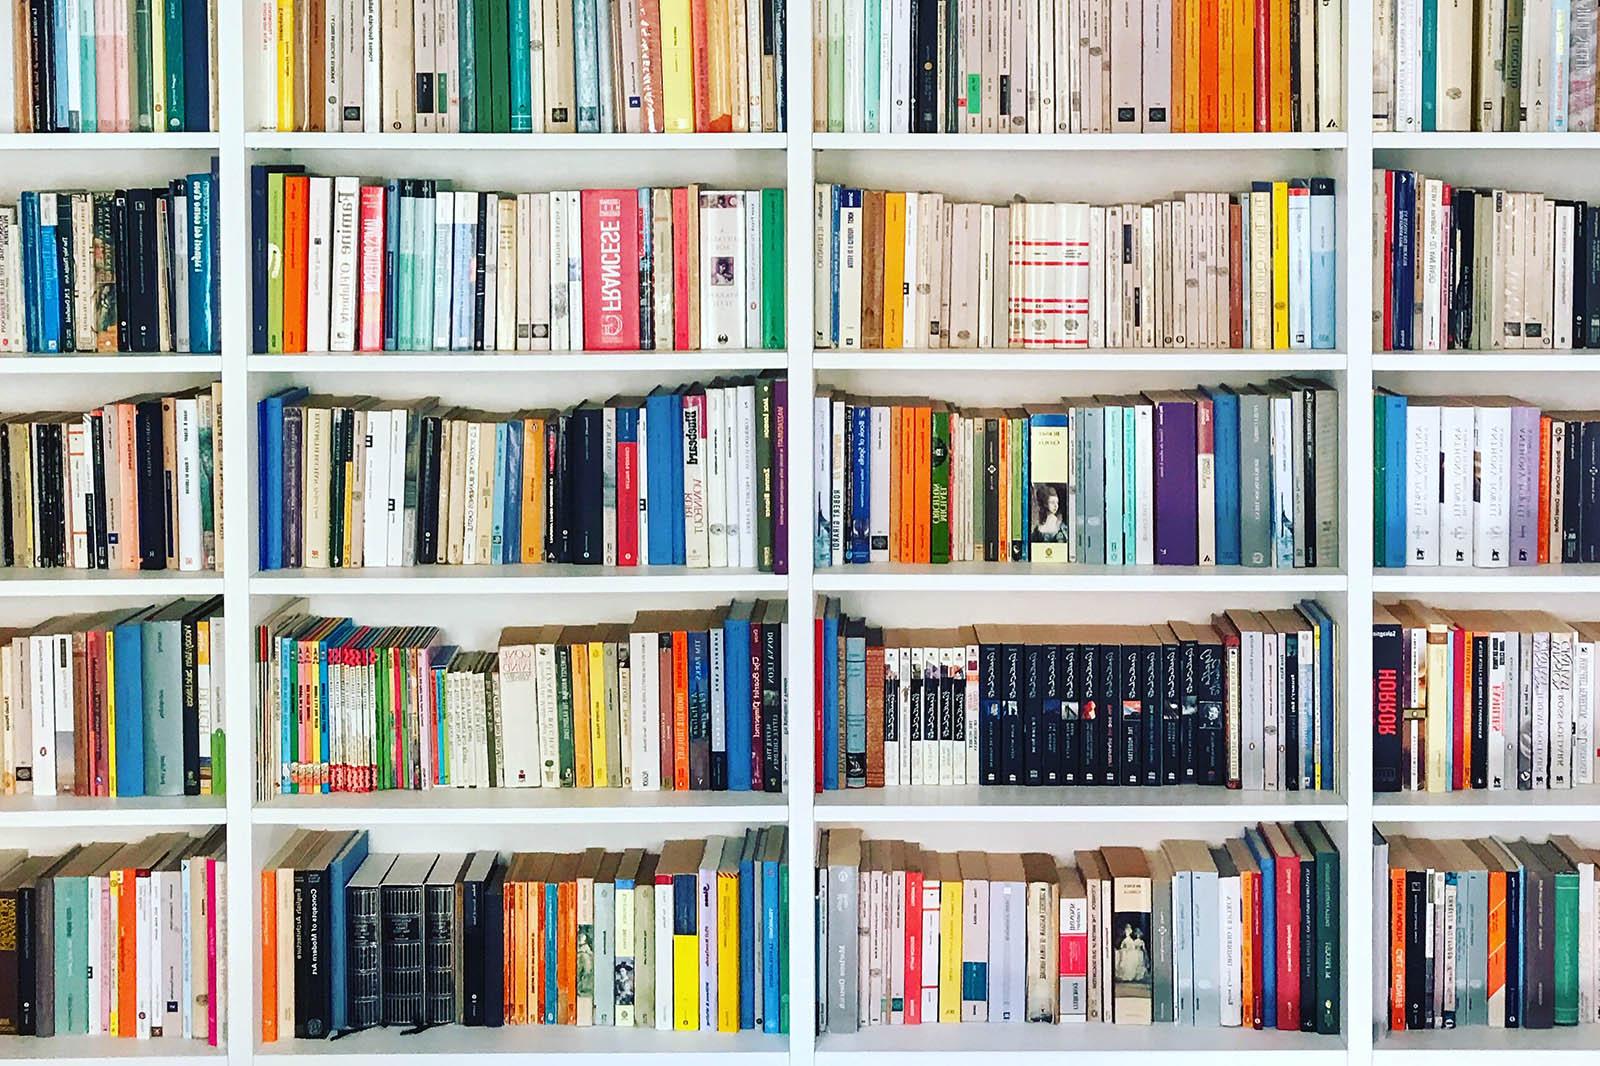 Photo of a colorful bookshelf